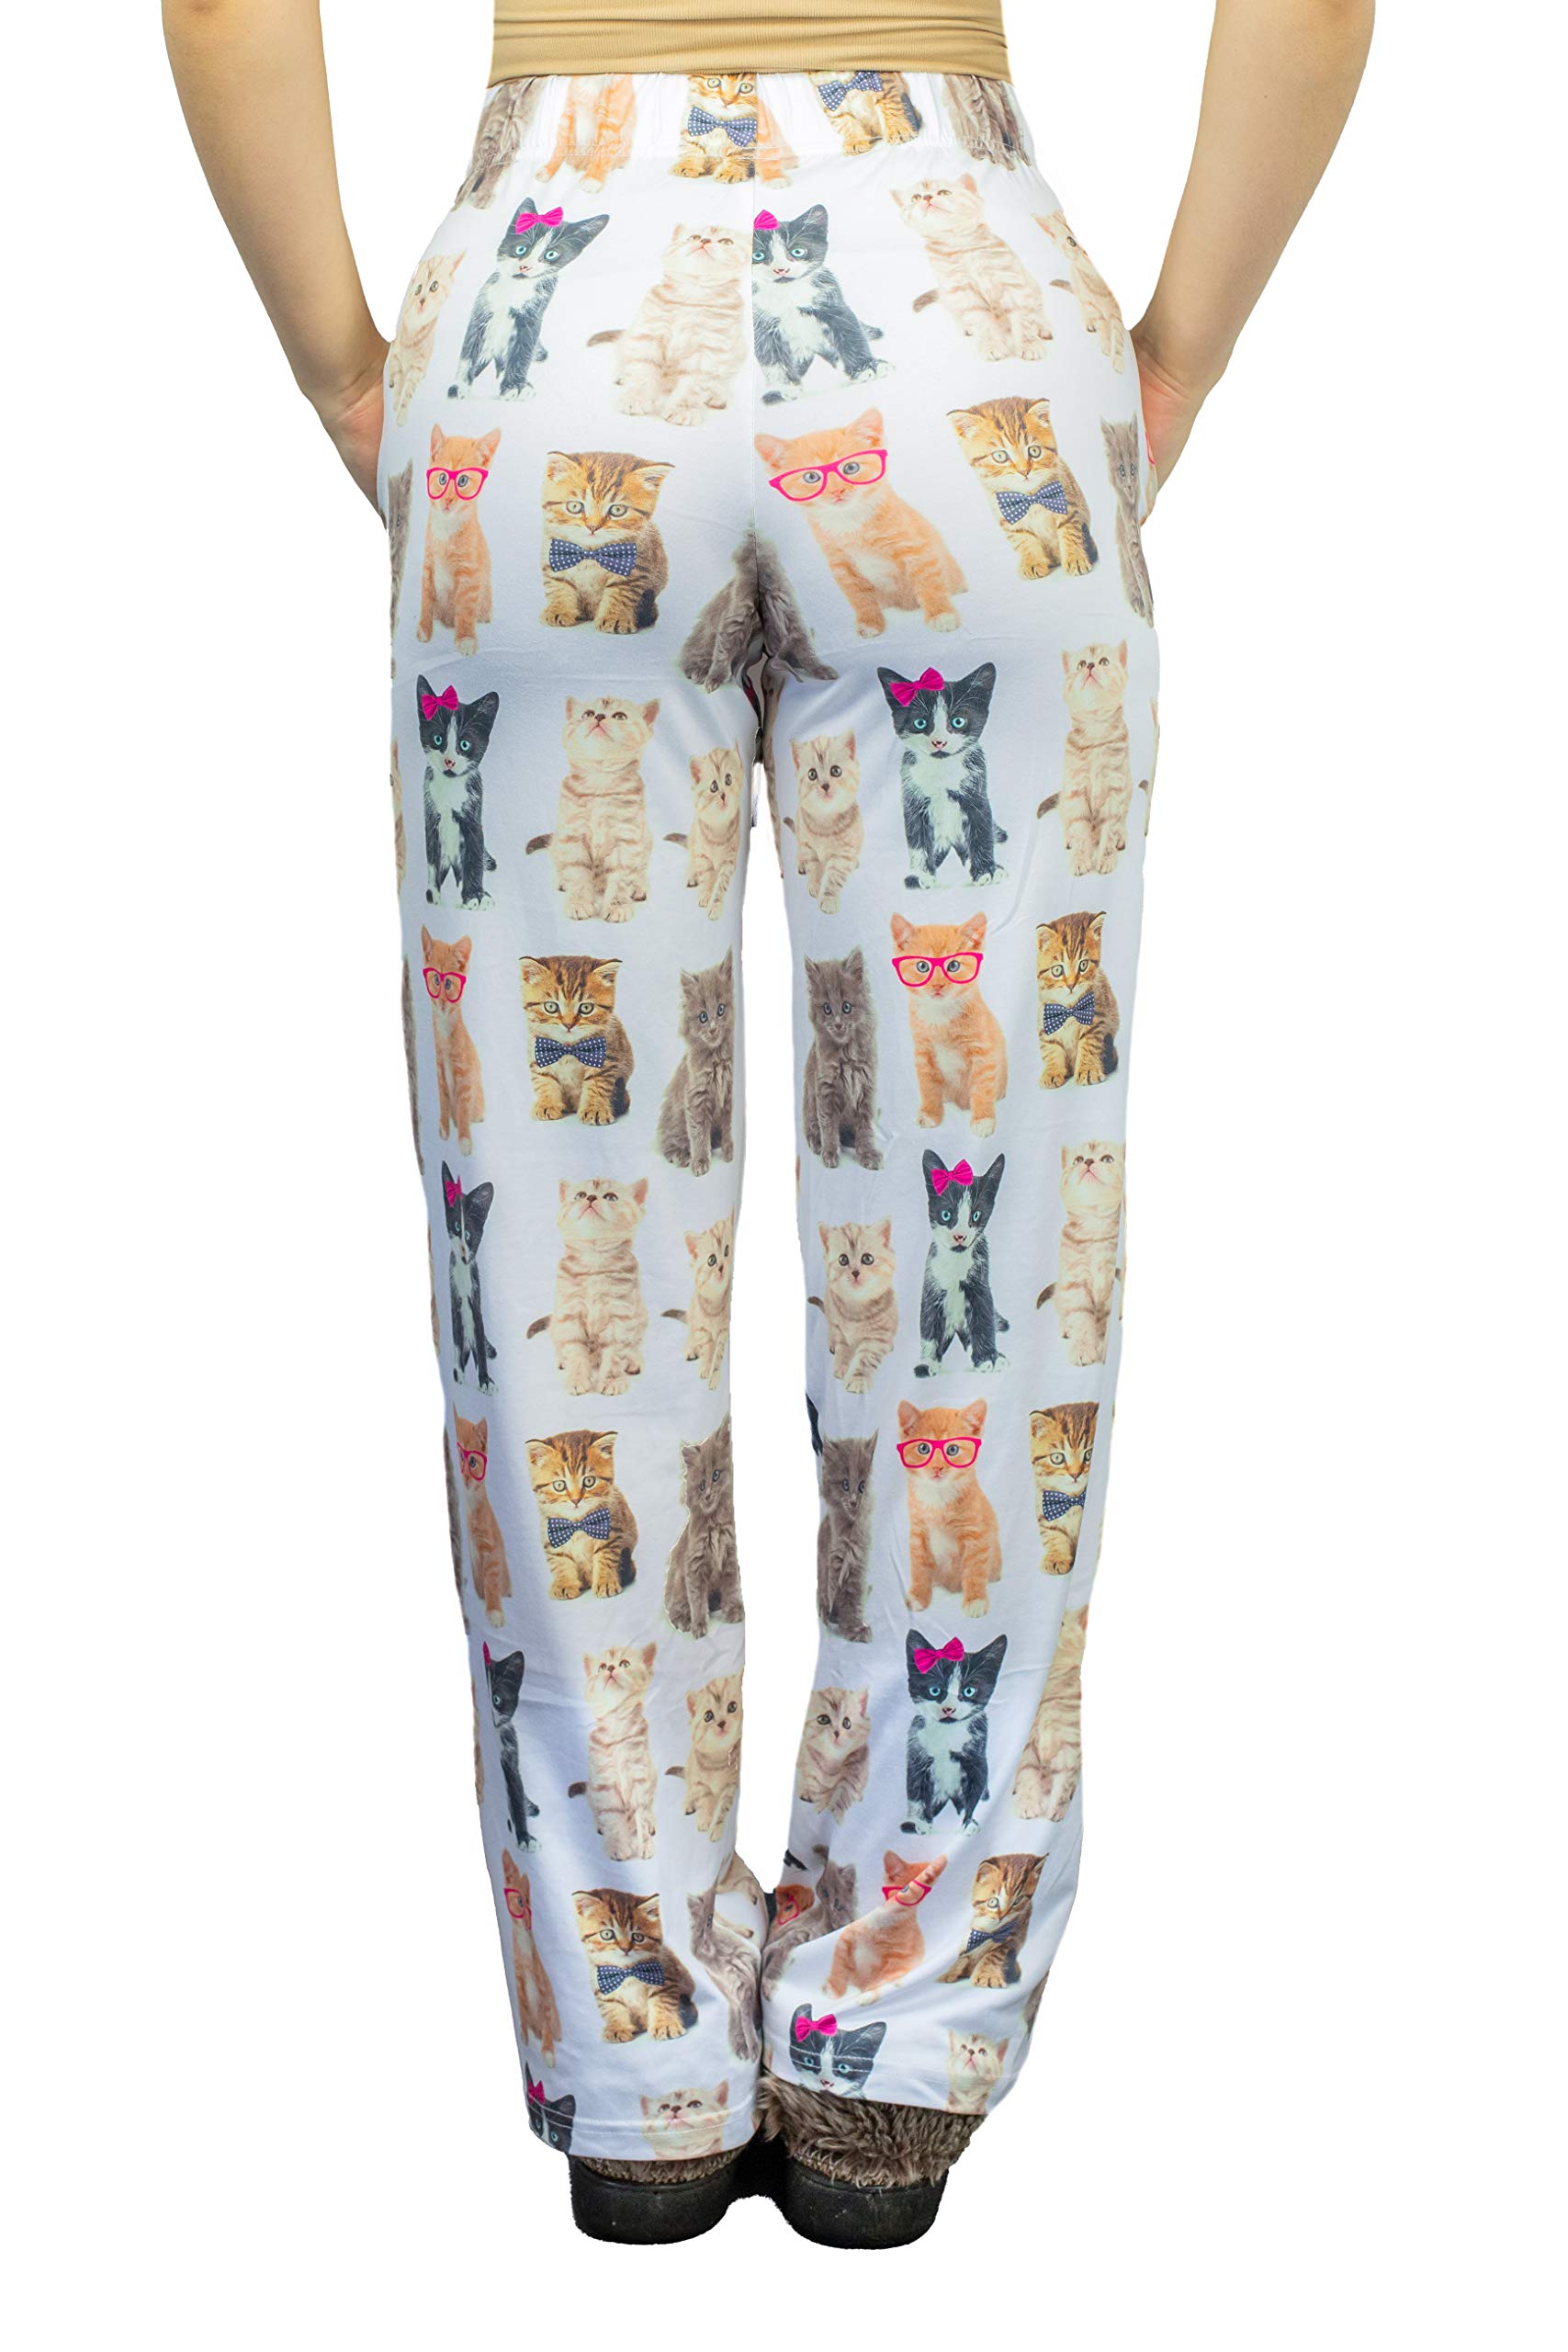 Waist down photo of model wearing Check Meowt pajama lounge pants back view (white background)